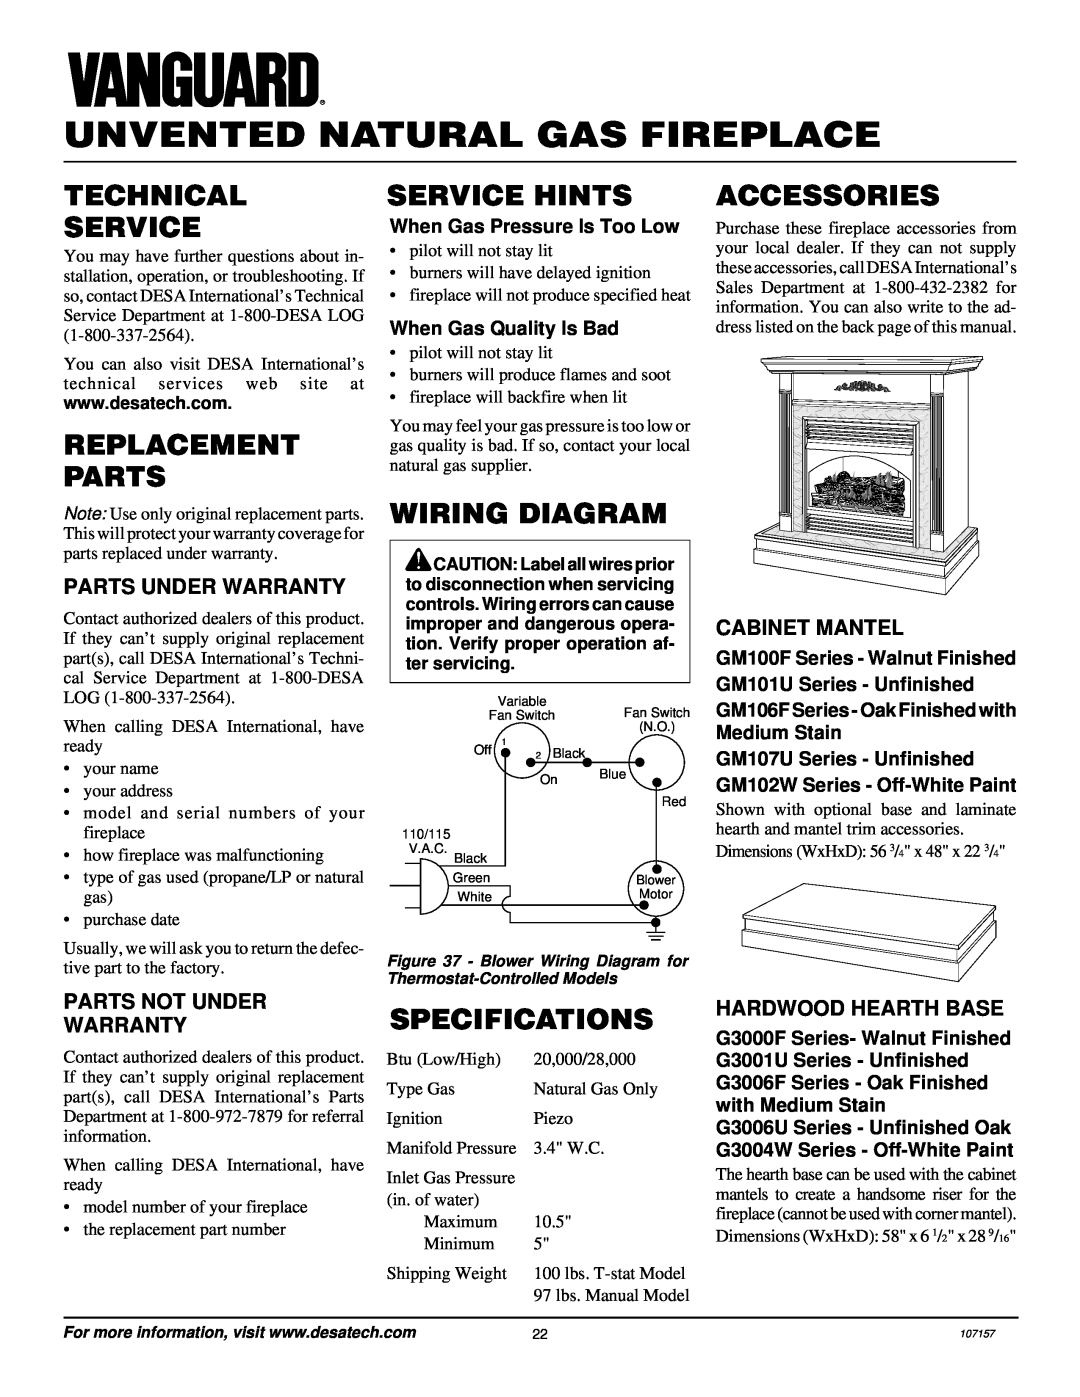 Vanguard Heating VSGF28NVA Technical Service, Replacement Parts, Service Hints, Wiring Diagram, Accessories, ¢Q¢Qqqq¢¢¢¢Q 